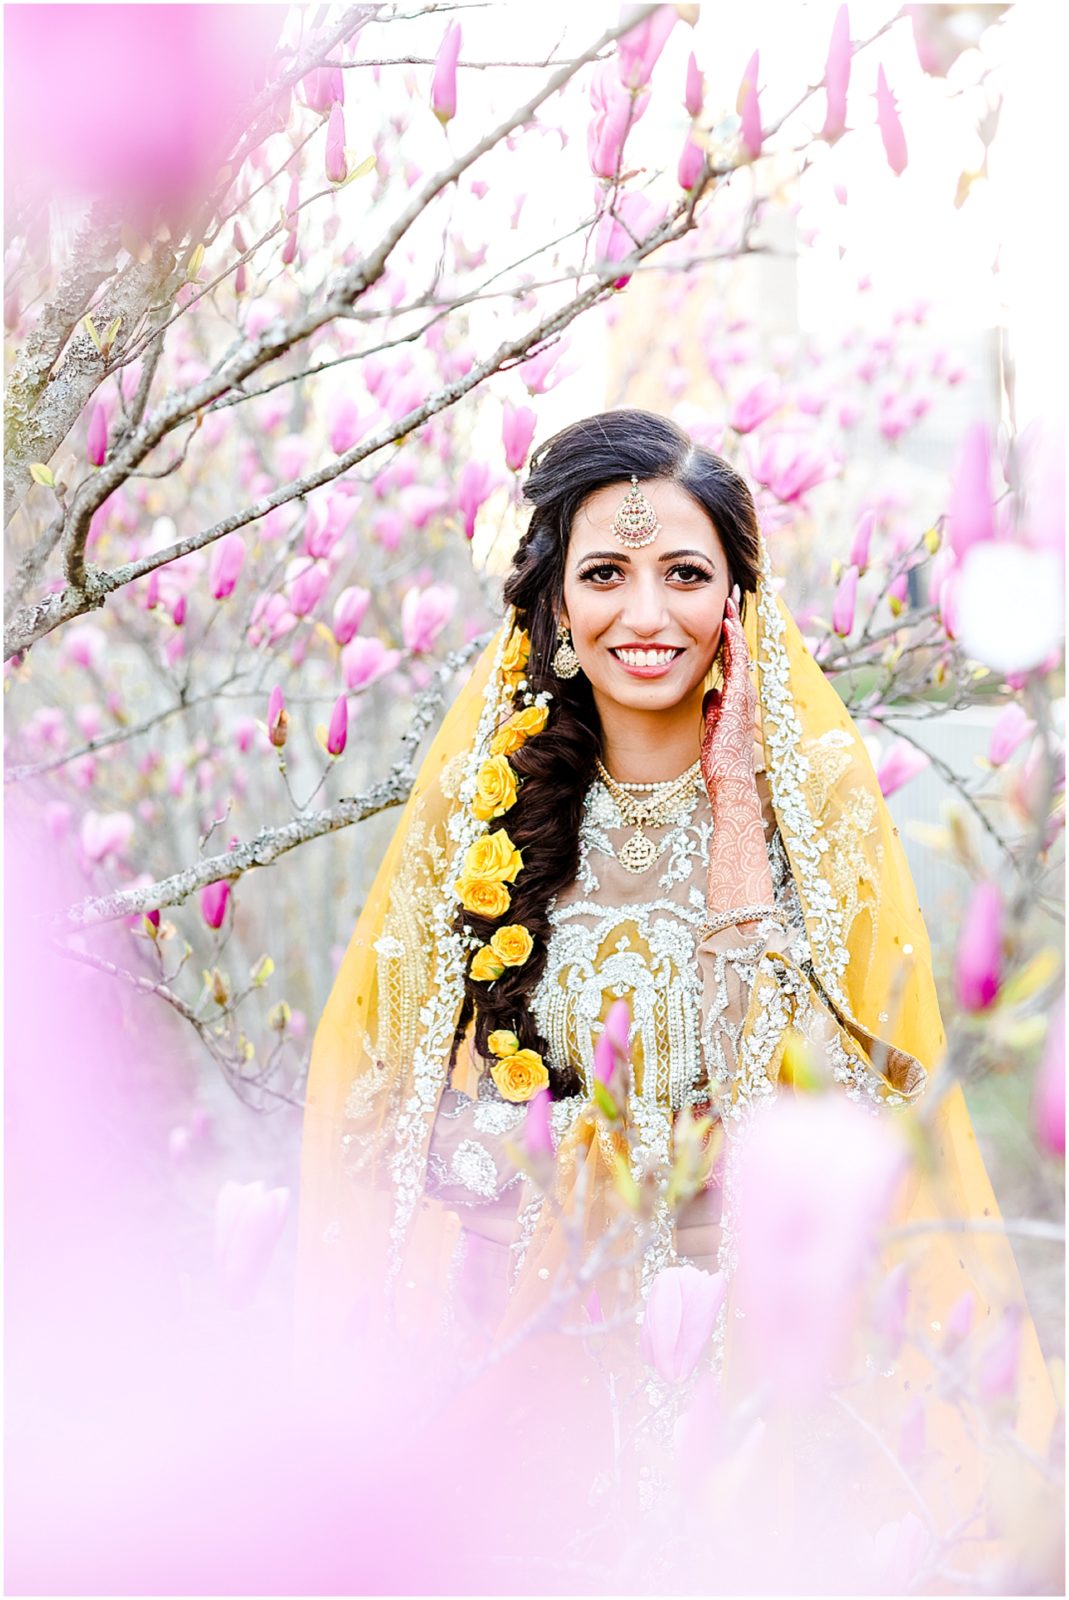 Hyatt Regency St.Louis at the Arch - four seasons - kansas city - st. louis - bride in spring tree for her henna mehndi wedding reception